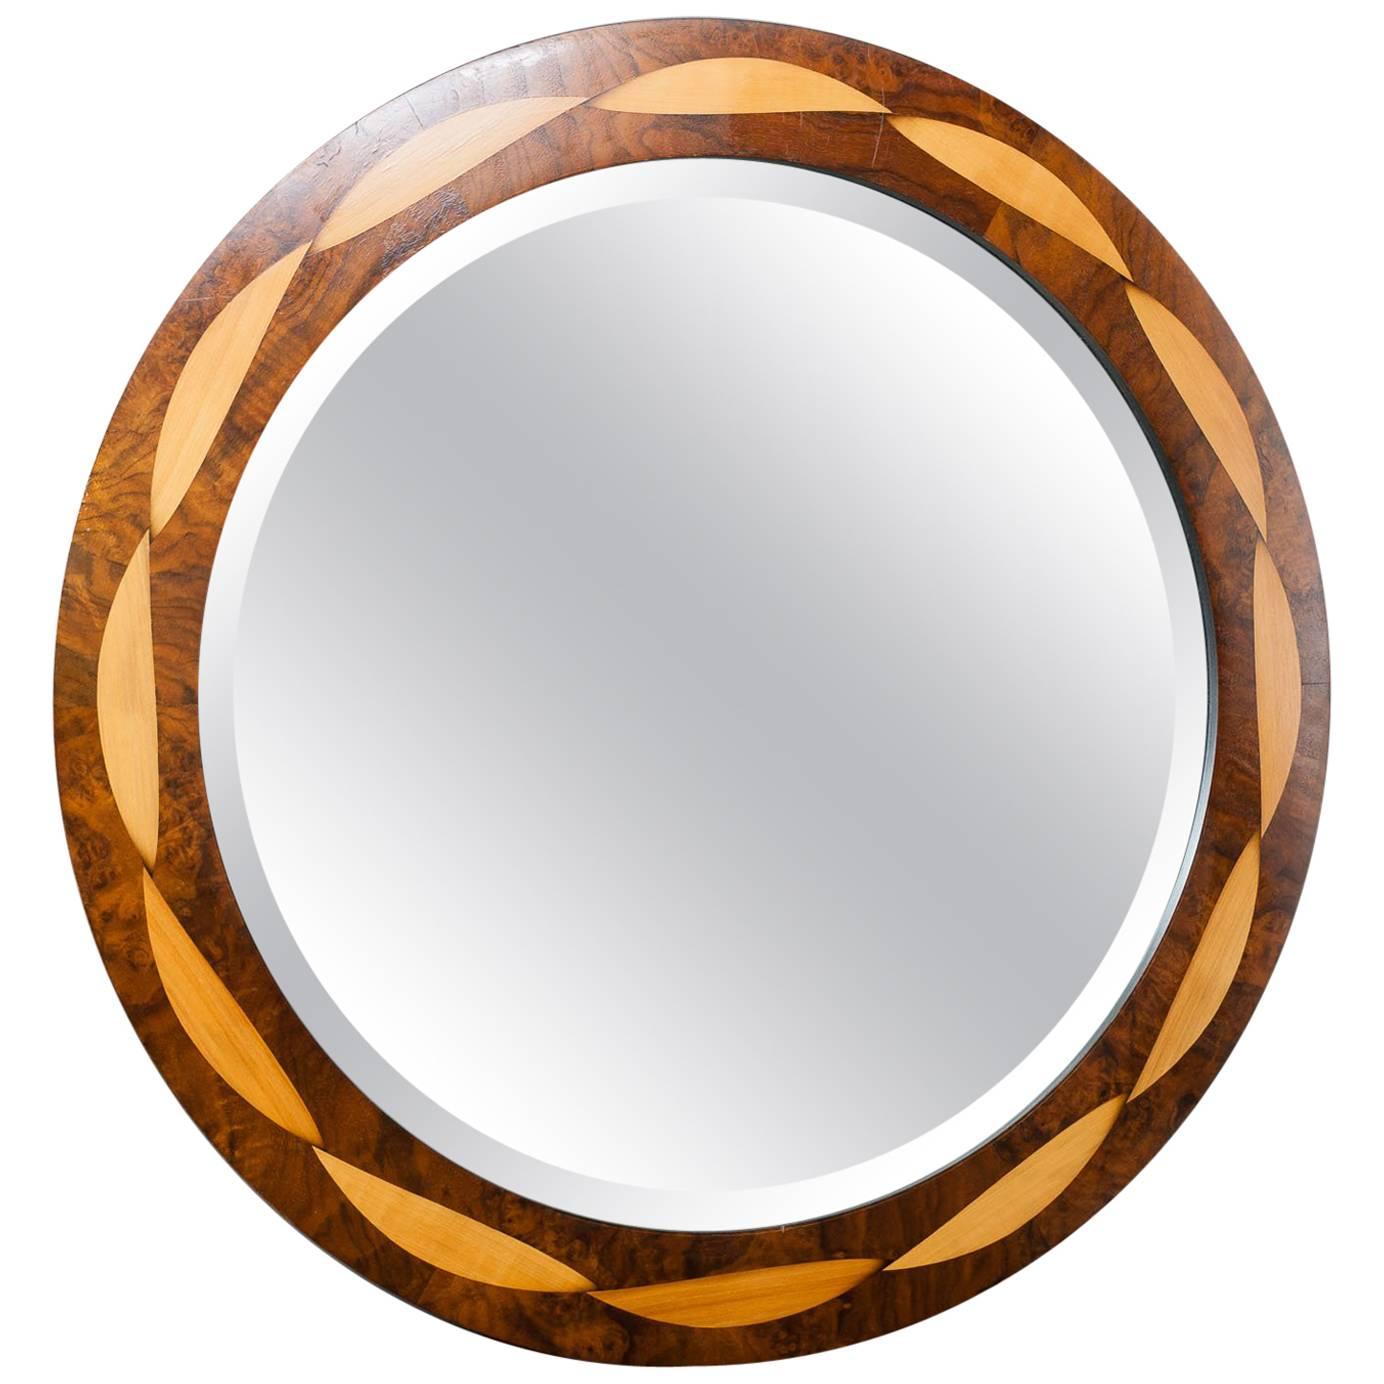 Toby Winteringham 'Plexus' Round Inlaid Bevelled Mirror Sycamore on Rosewood